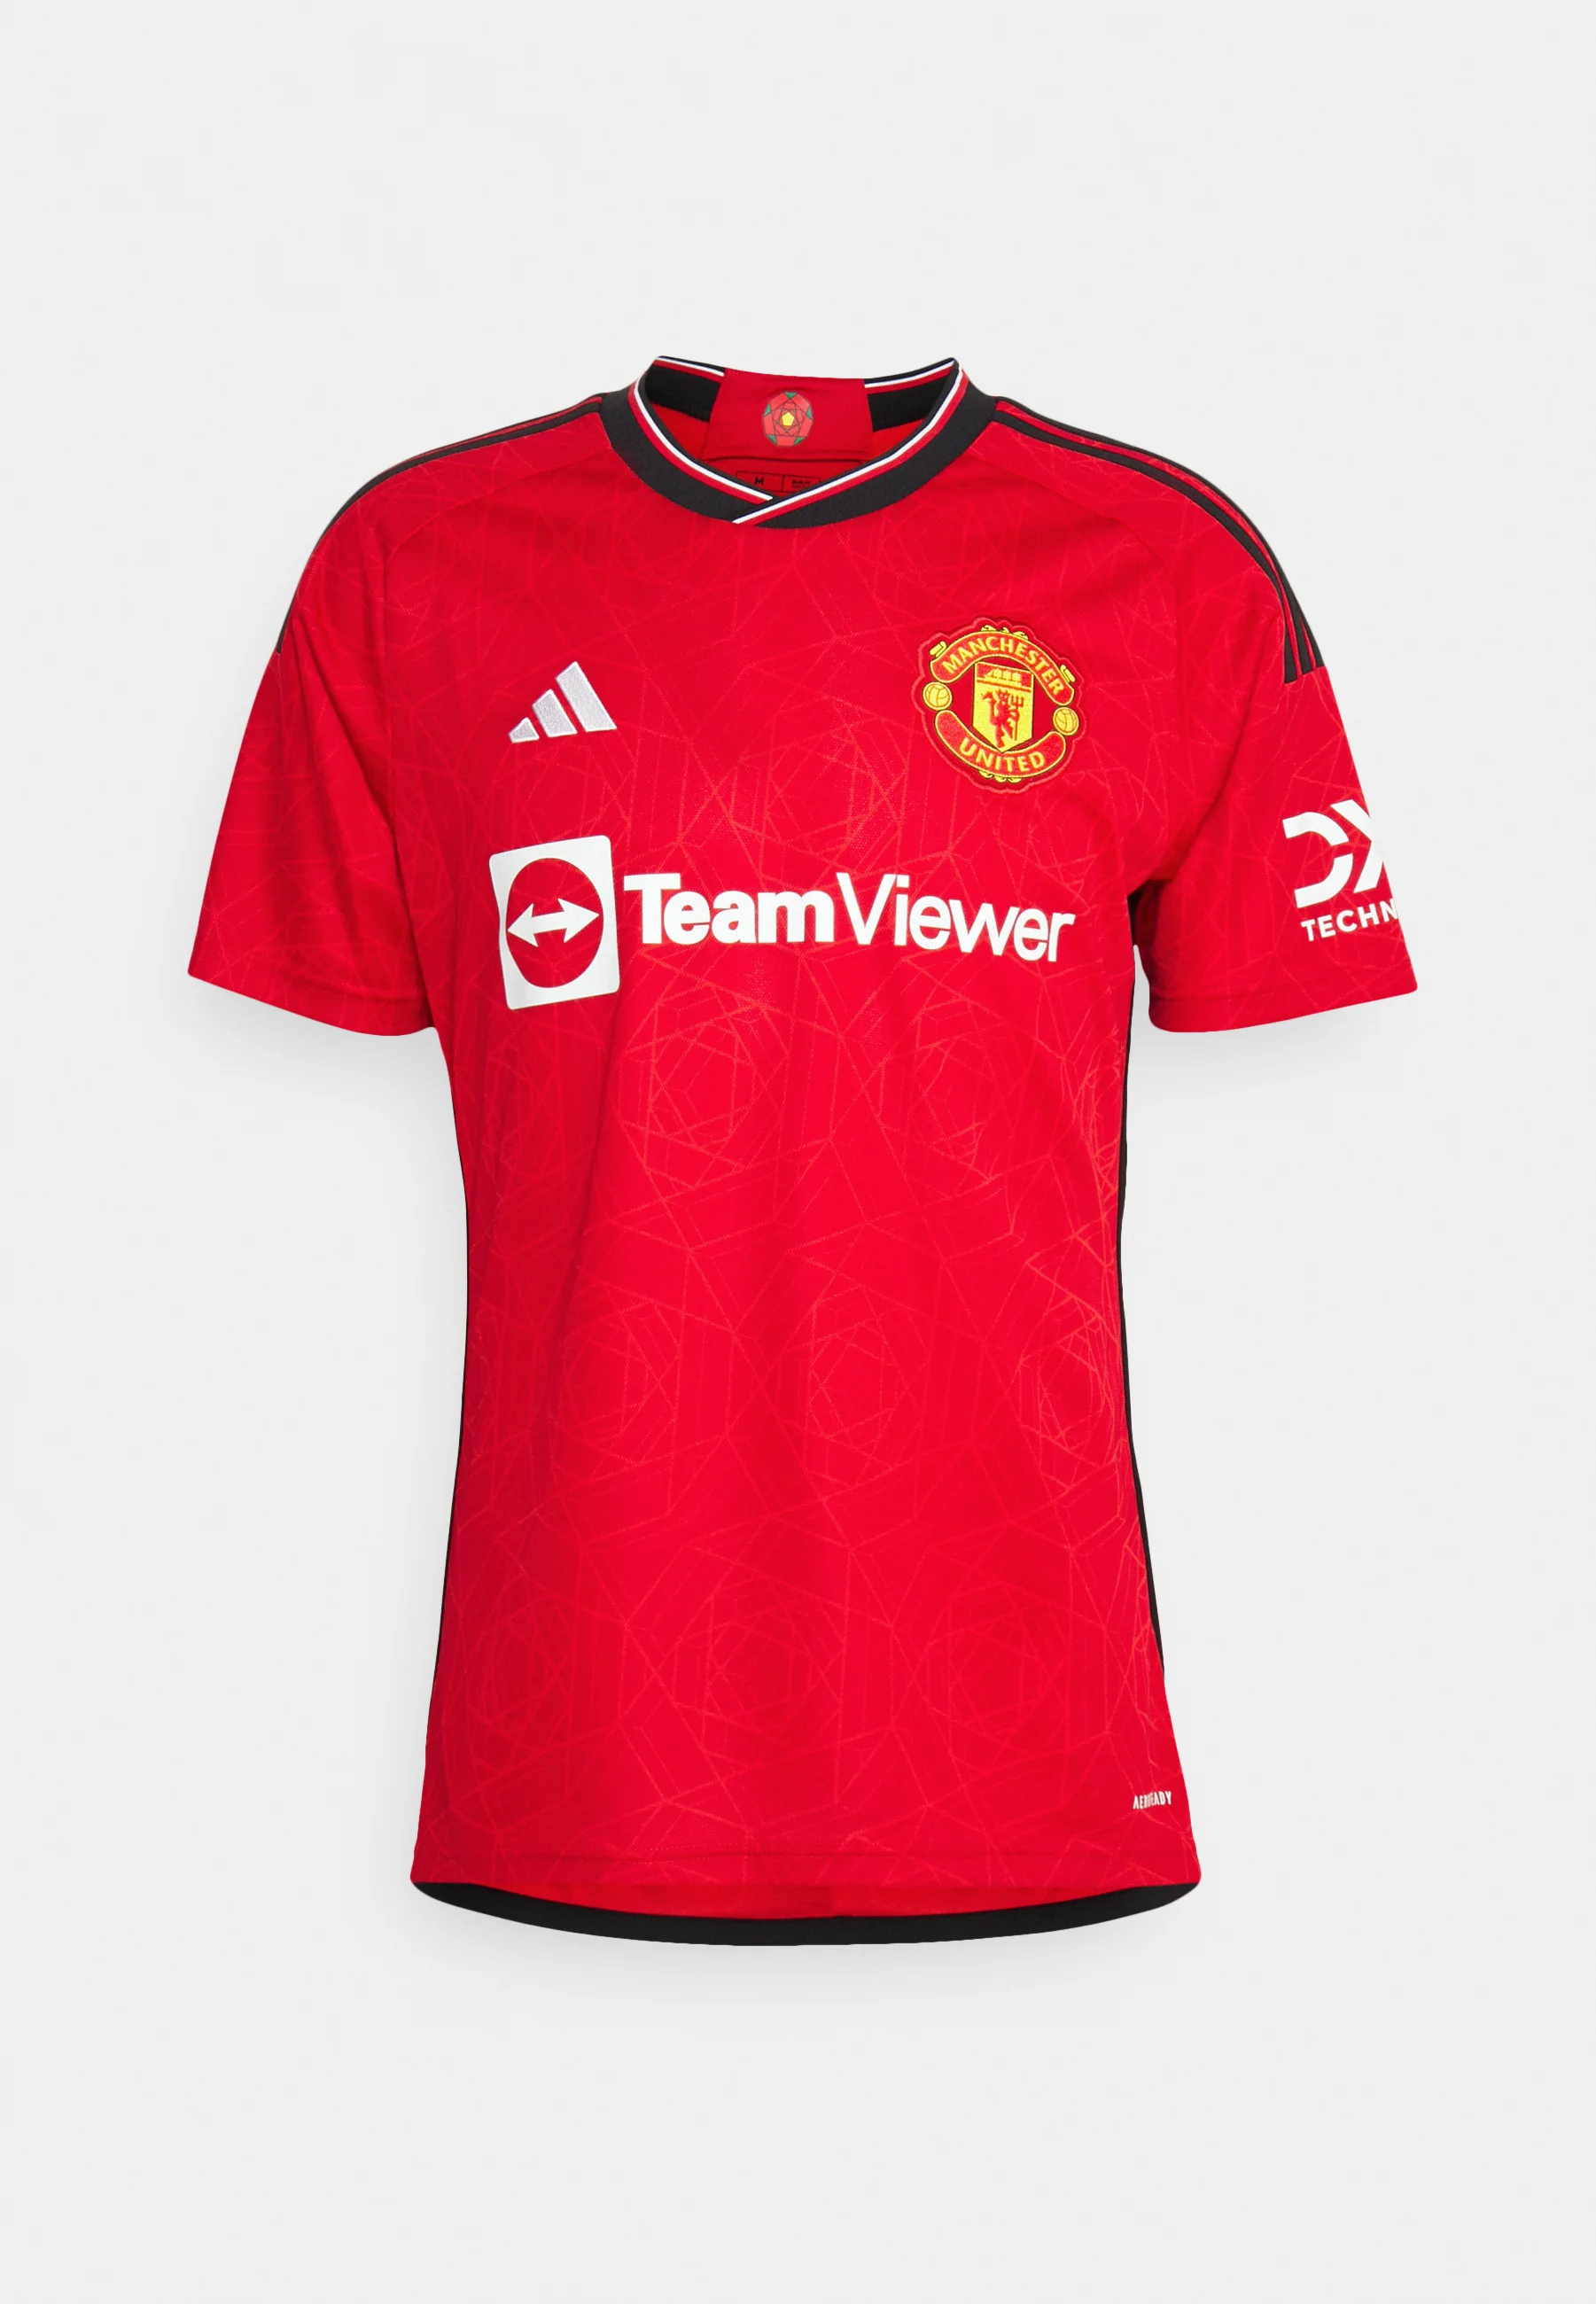 Camiseta manga larga primera equipación Manchester United 23/24